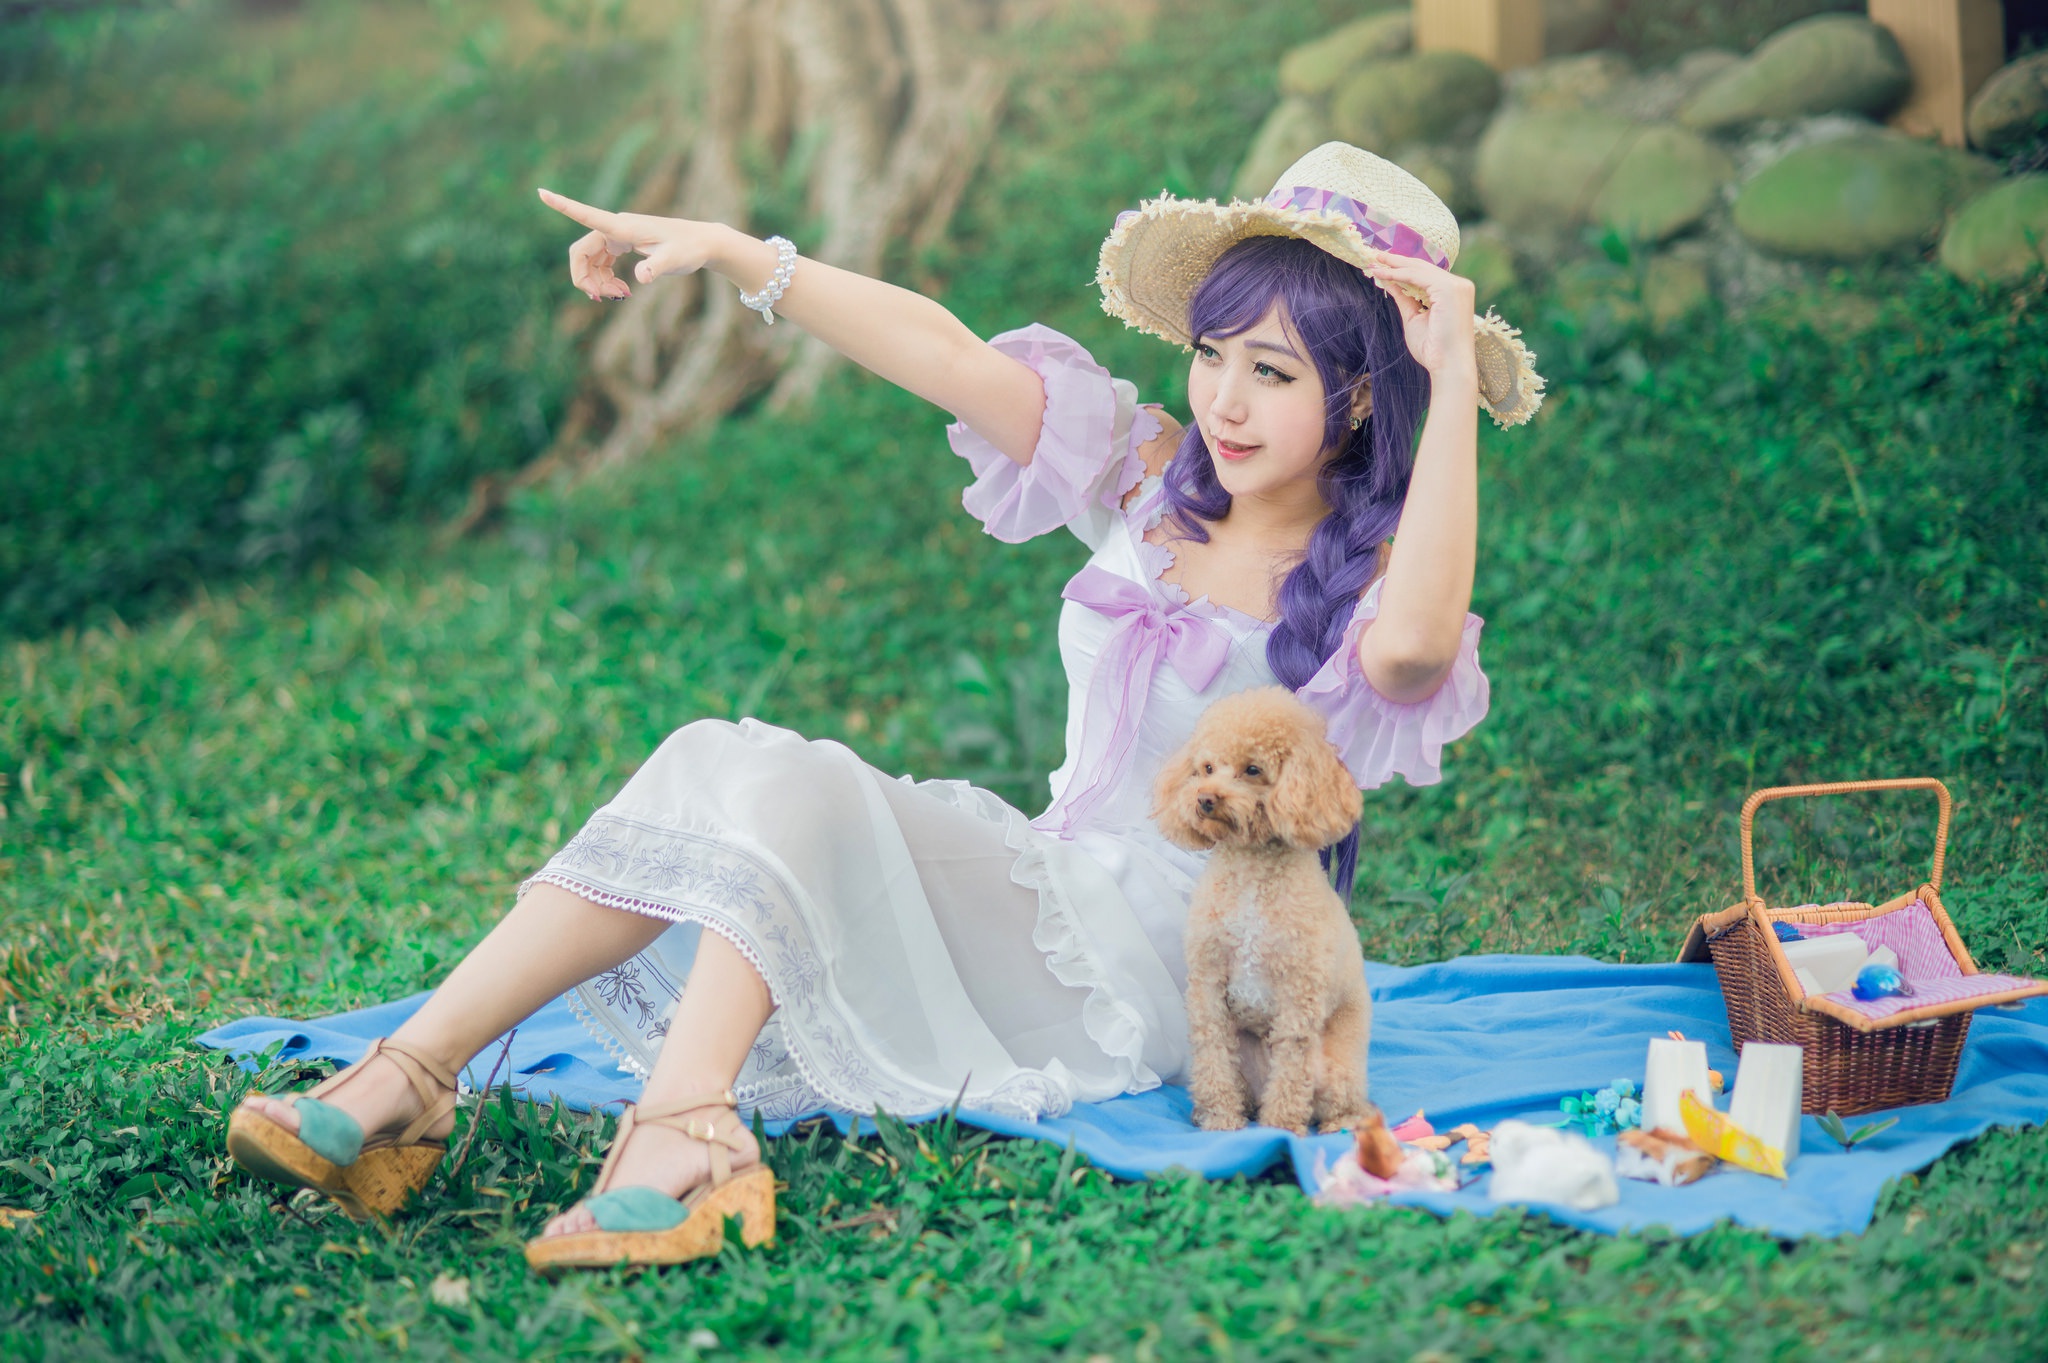 Asian Model Women Long Hair Dark Hair Straw Hat Grass Blankets Dog Baskets Barefoot Sandal Dress Bra 2048x1363